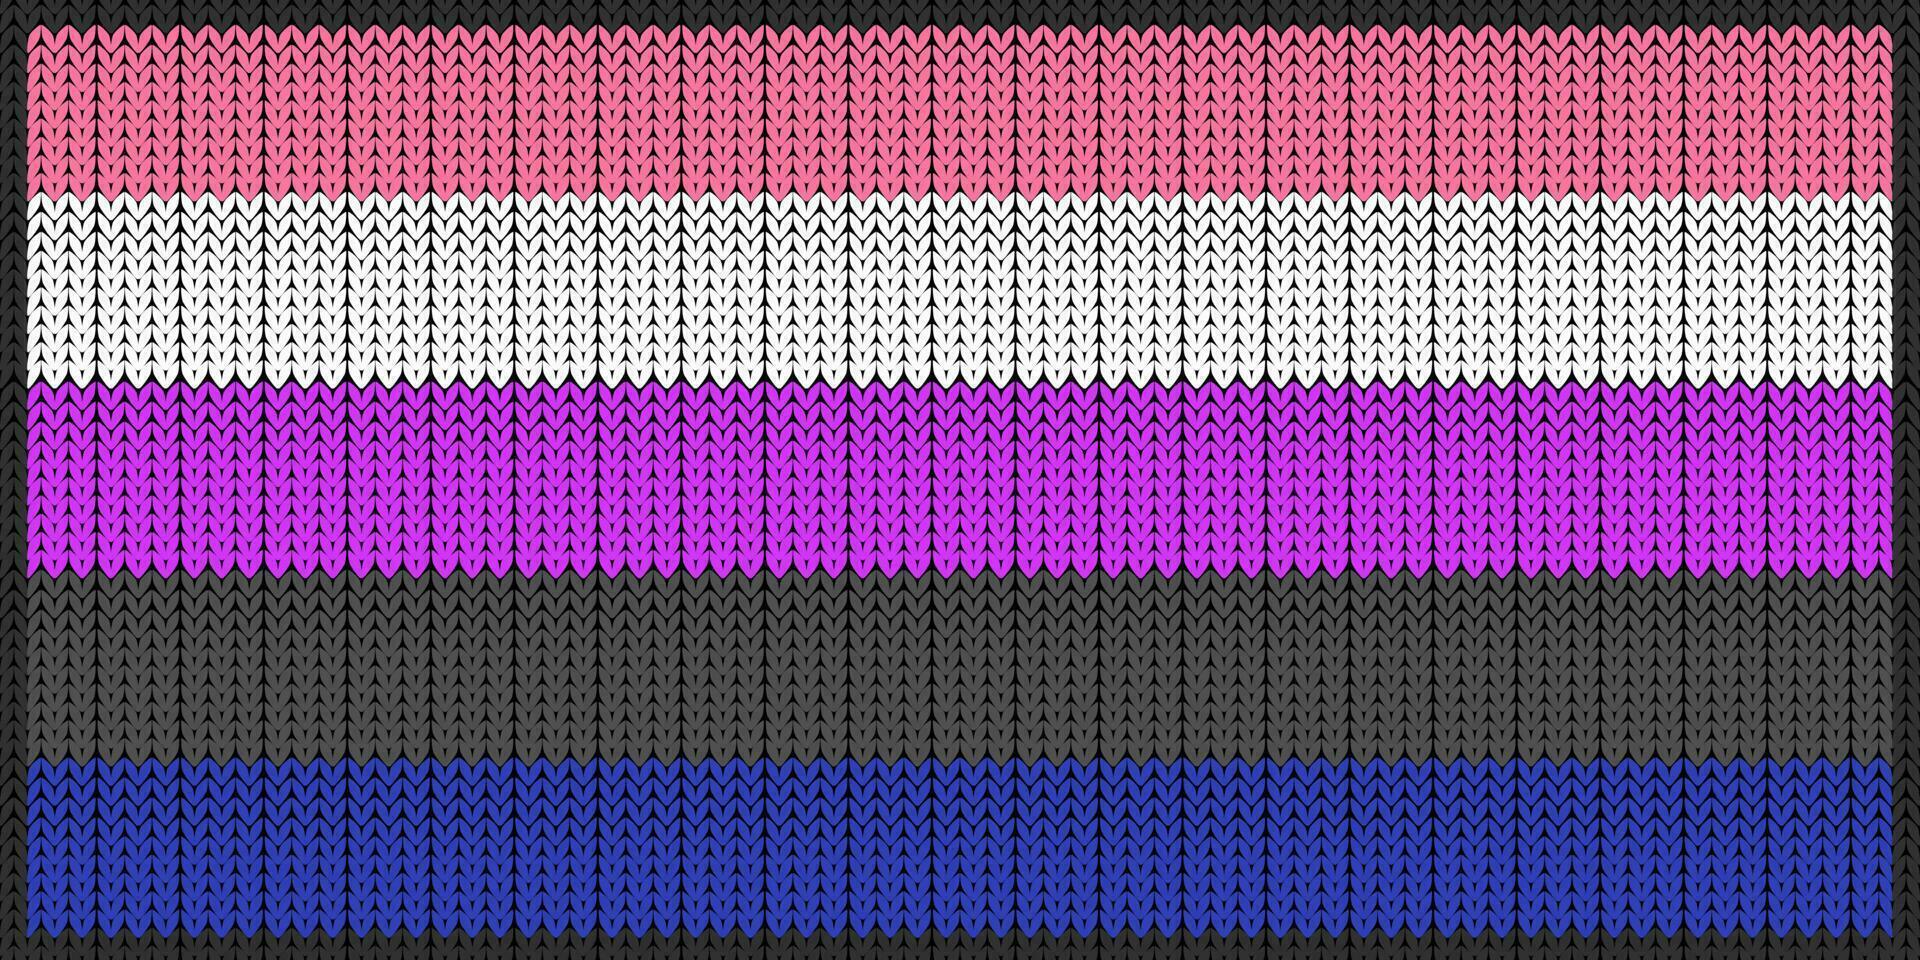 Genderfluid Flag. Pride flag illustration. Lgbt community symbol in rainbow colors. Vector backdrop for your design. LGBT FLAG WITH Knitting